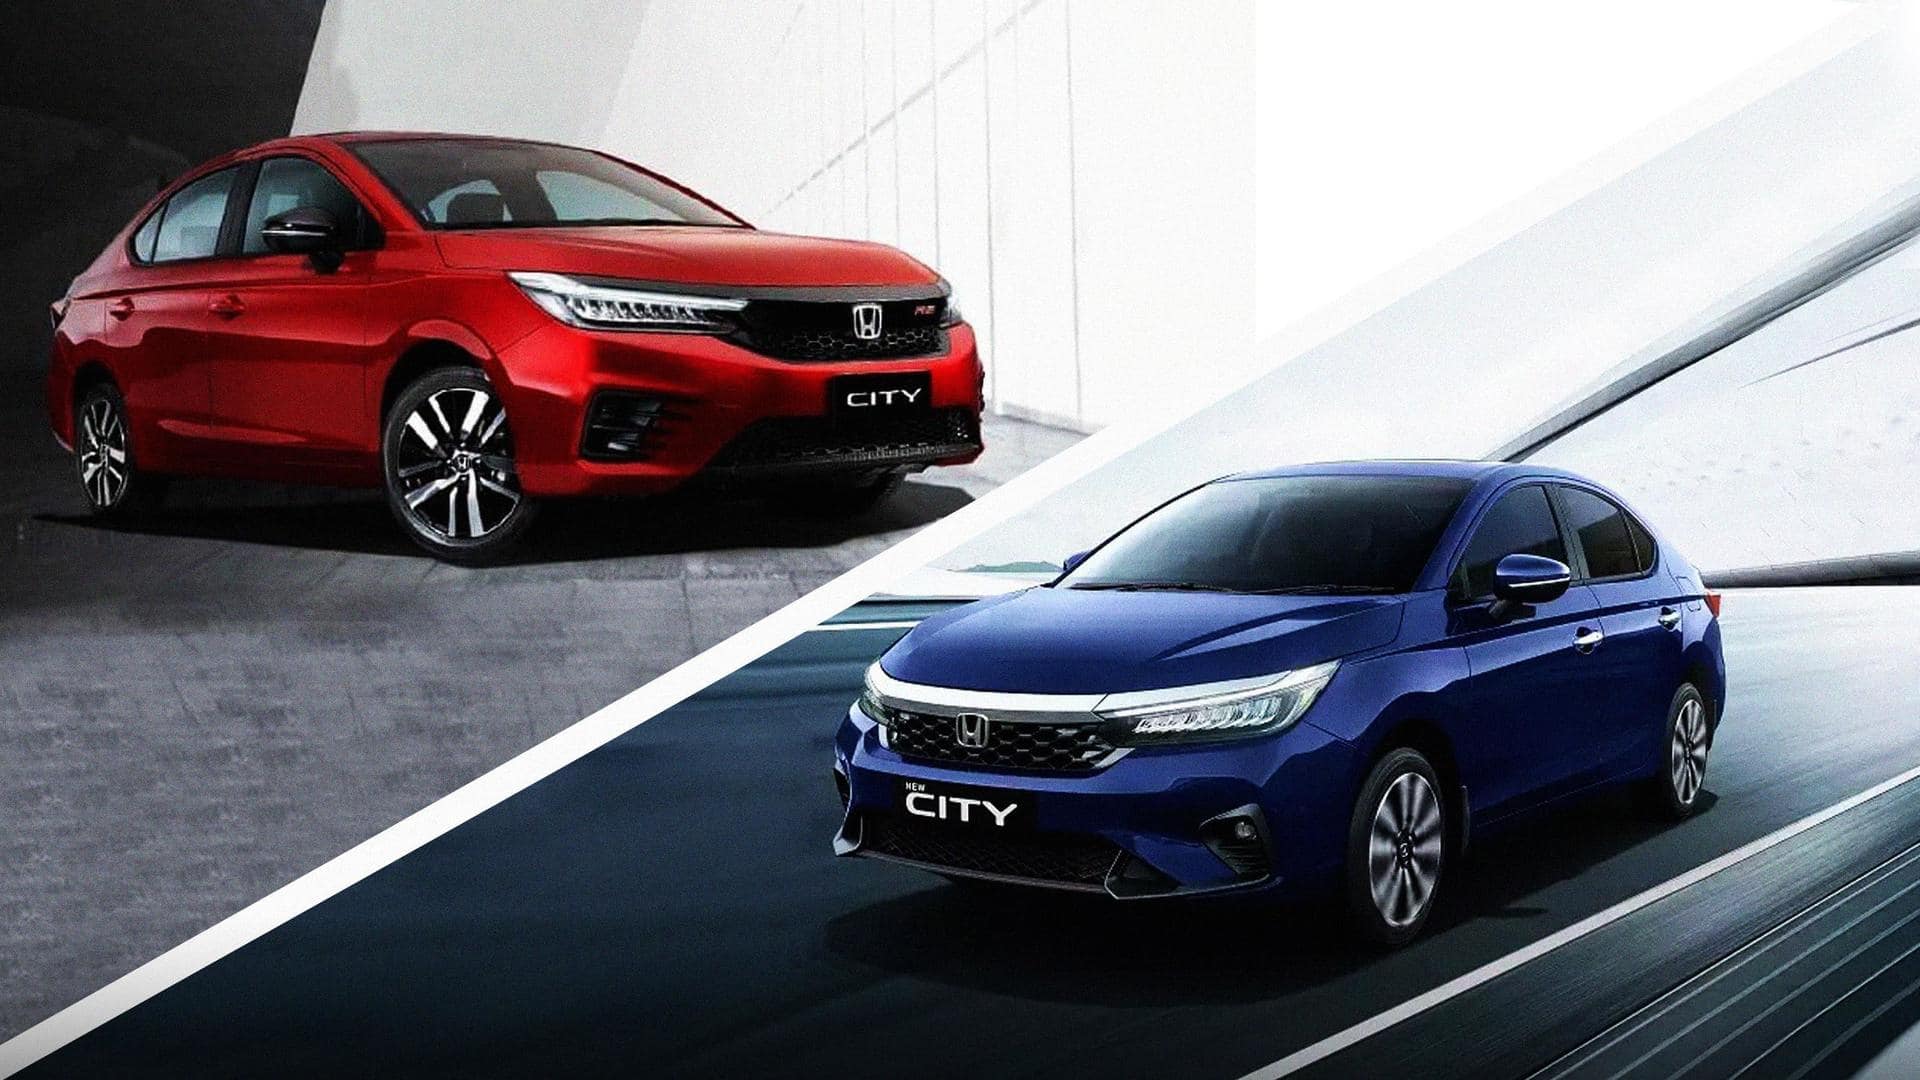 2023 Honda City (facelift) v/s 2022 fifth-generation model: What's different